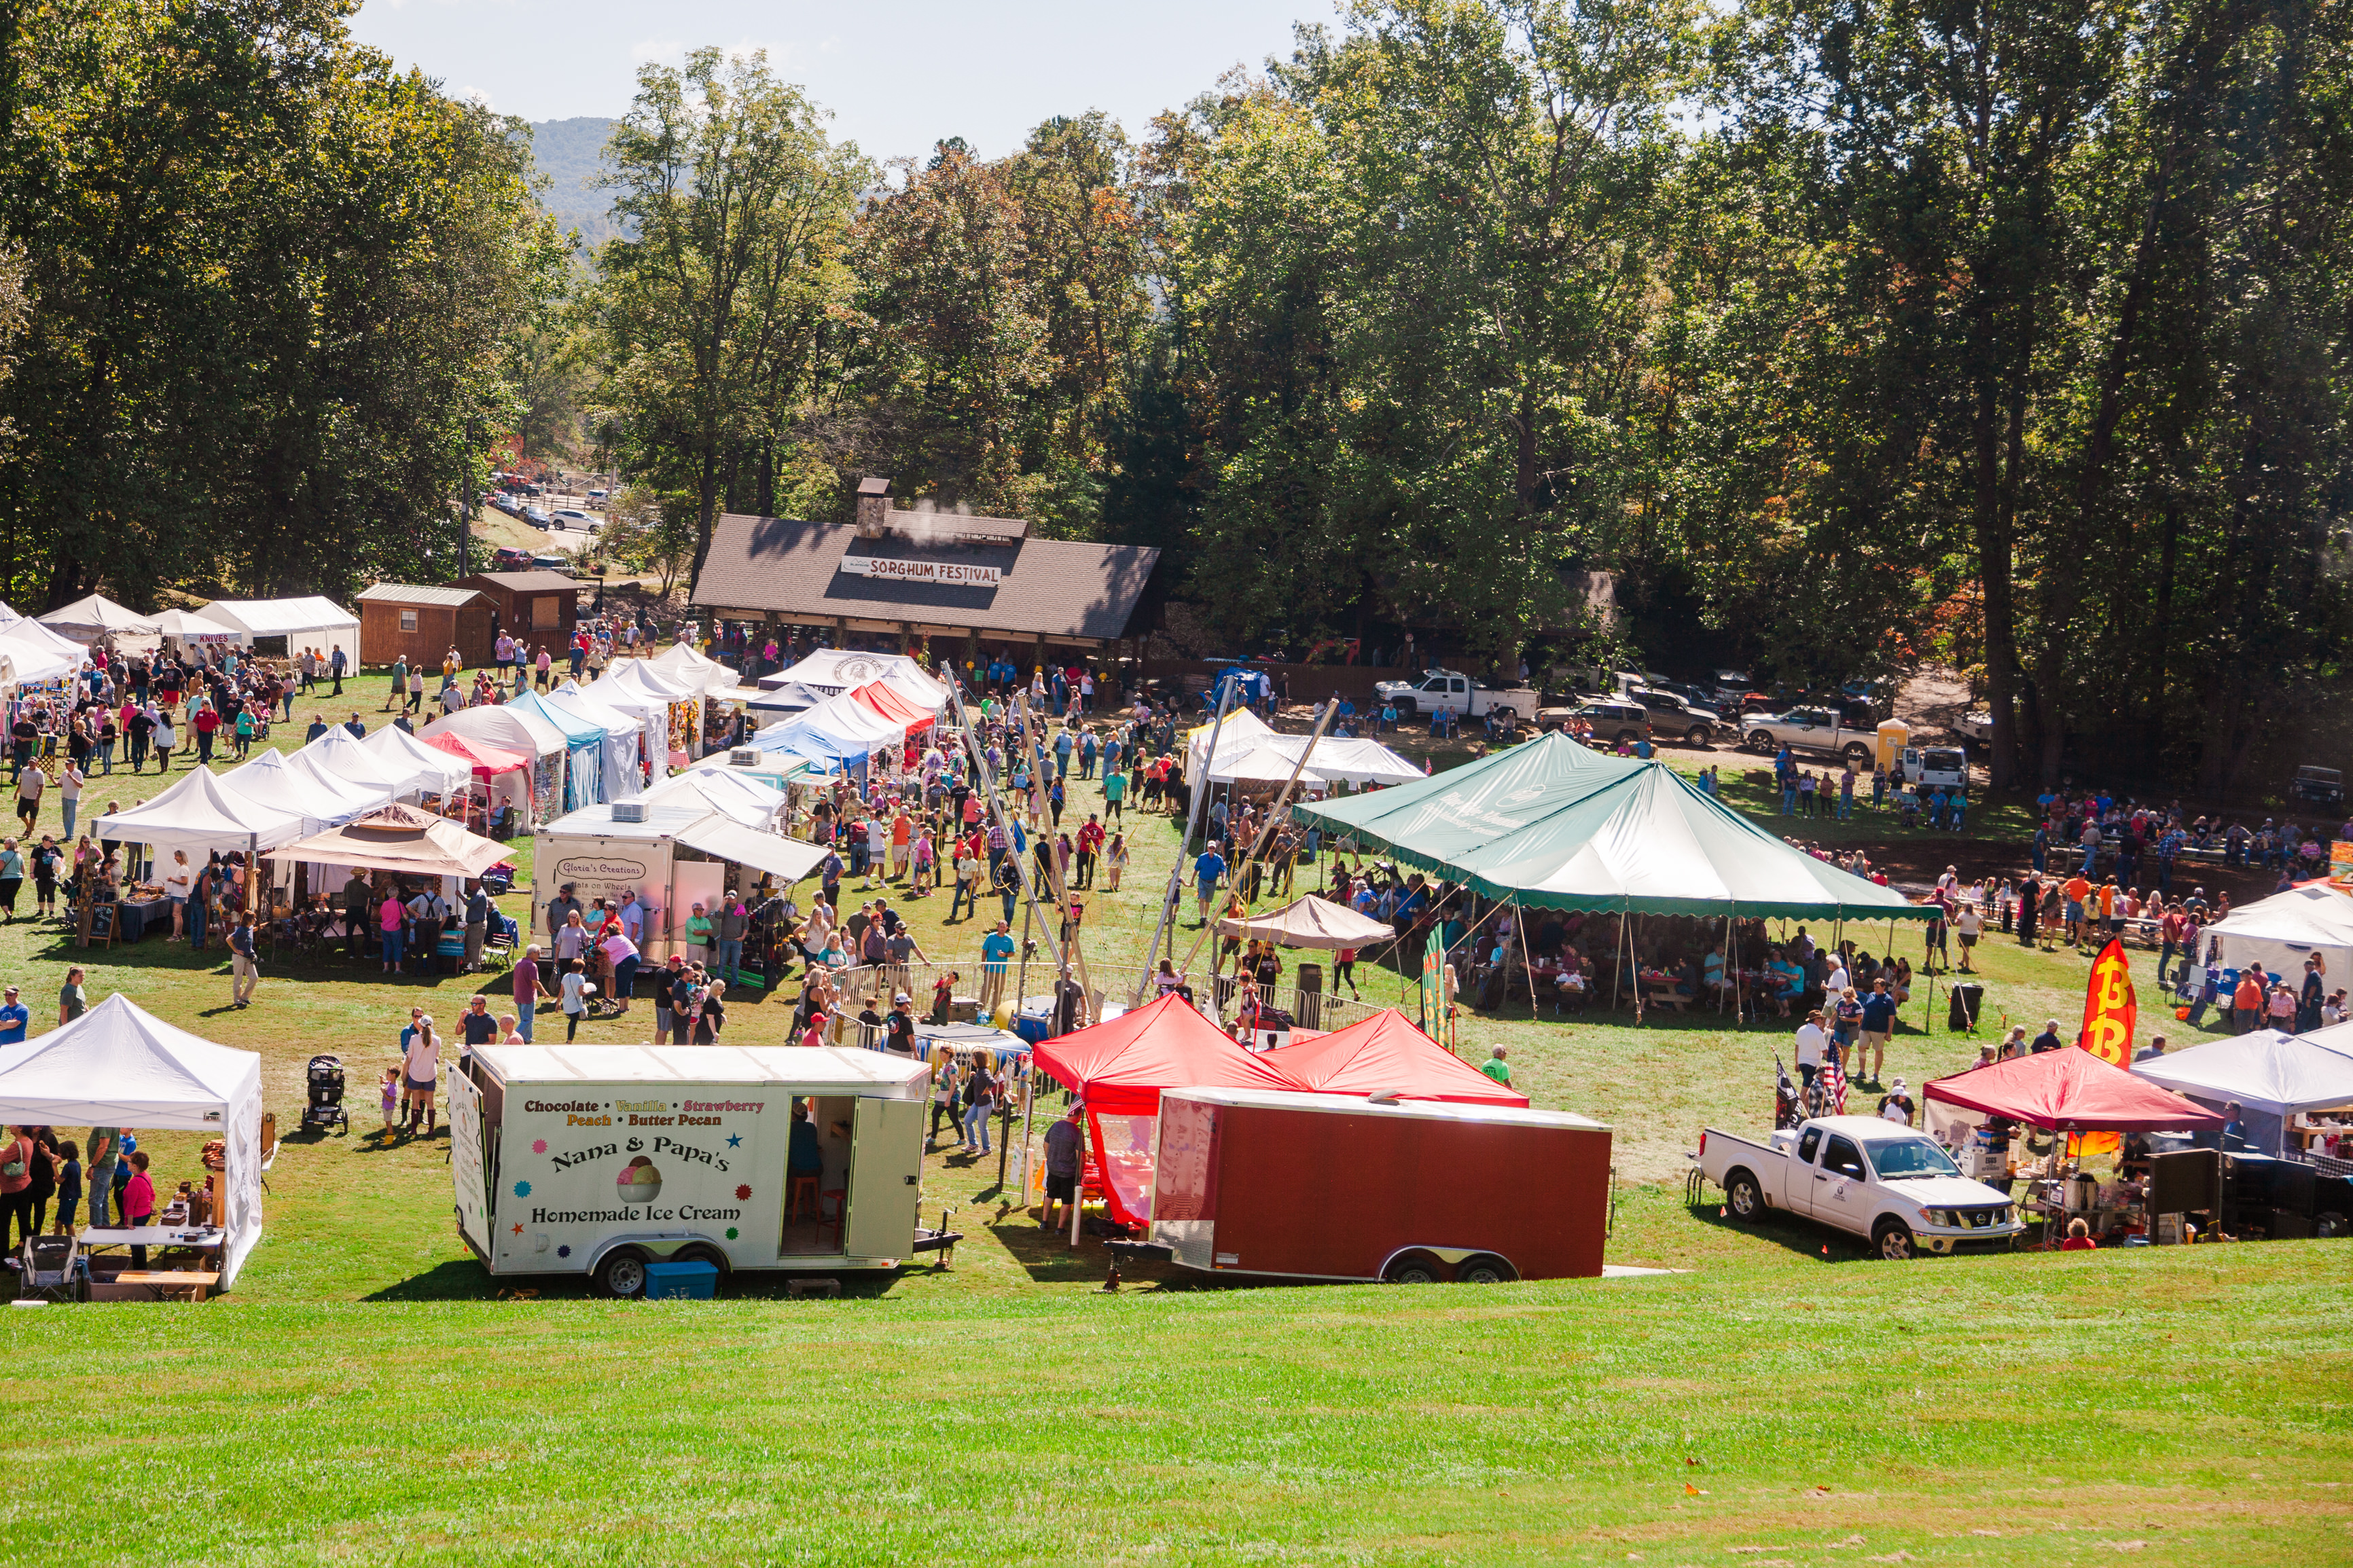 Festival season is right around the corner in Blairsville!